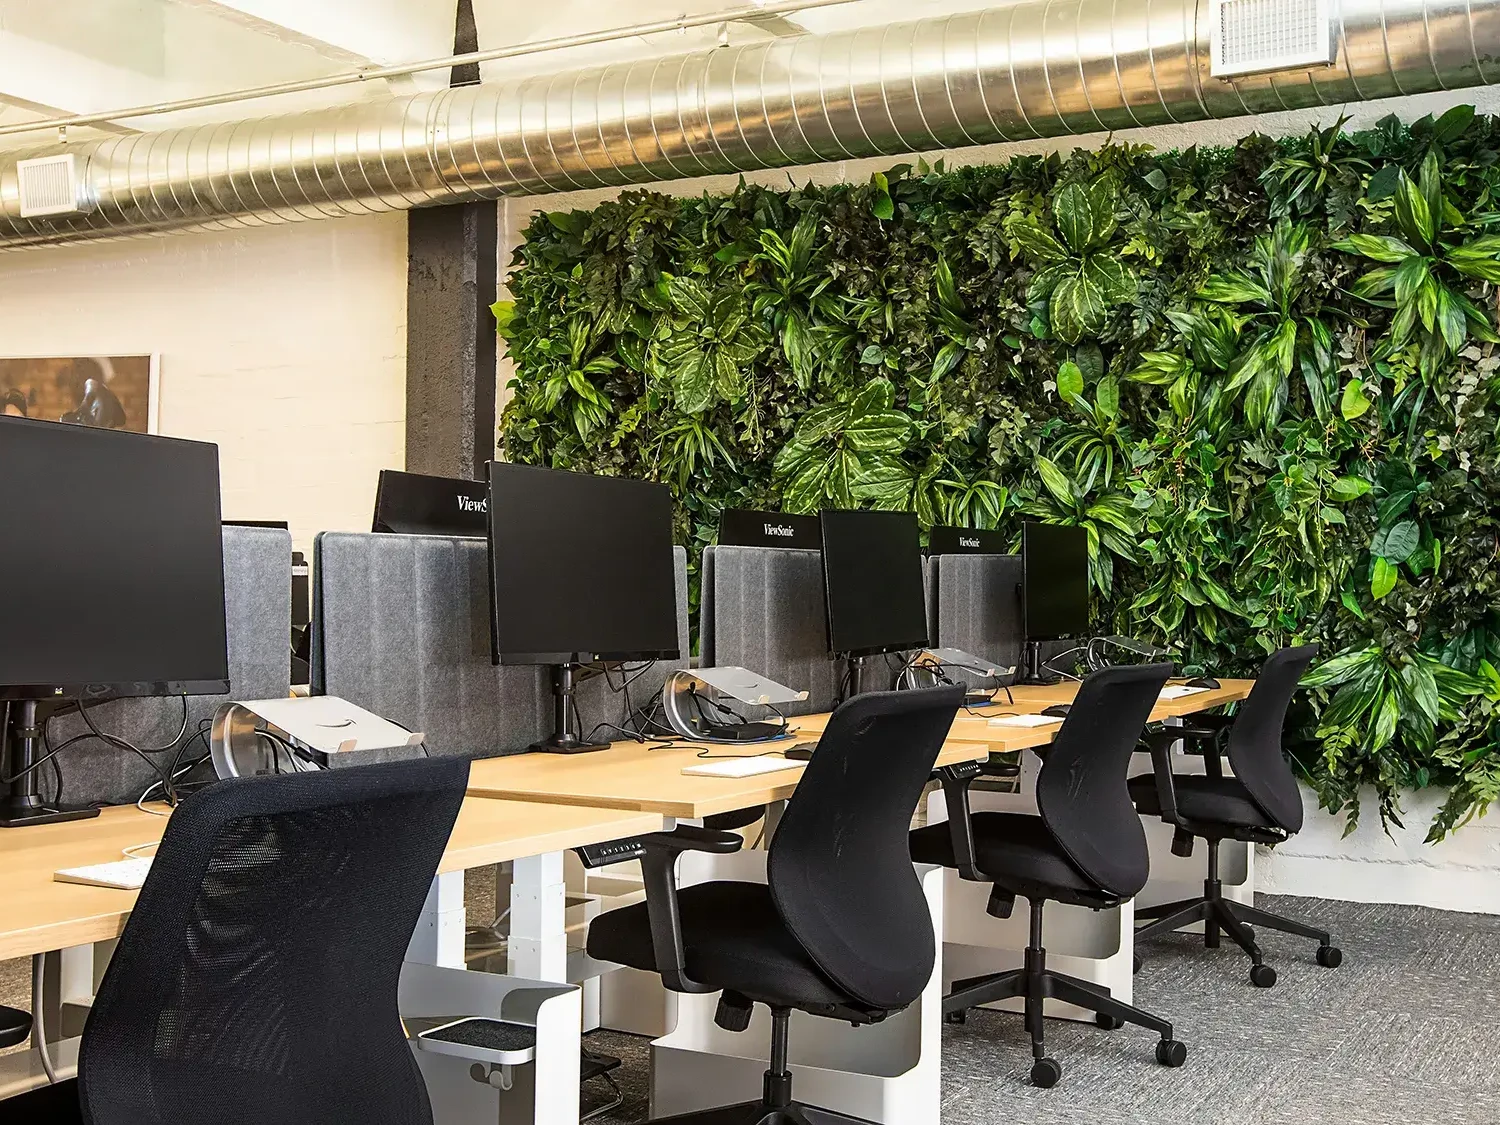 Green living wall next to office desks